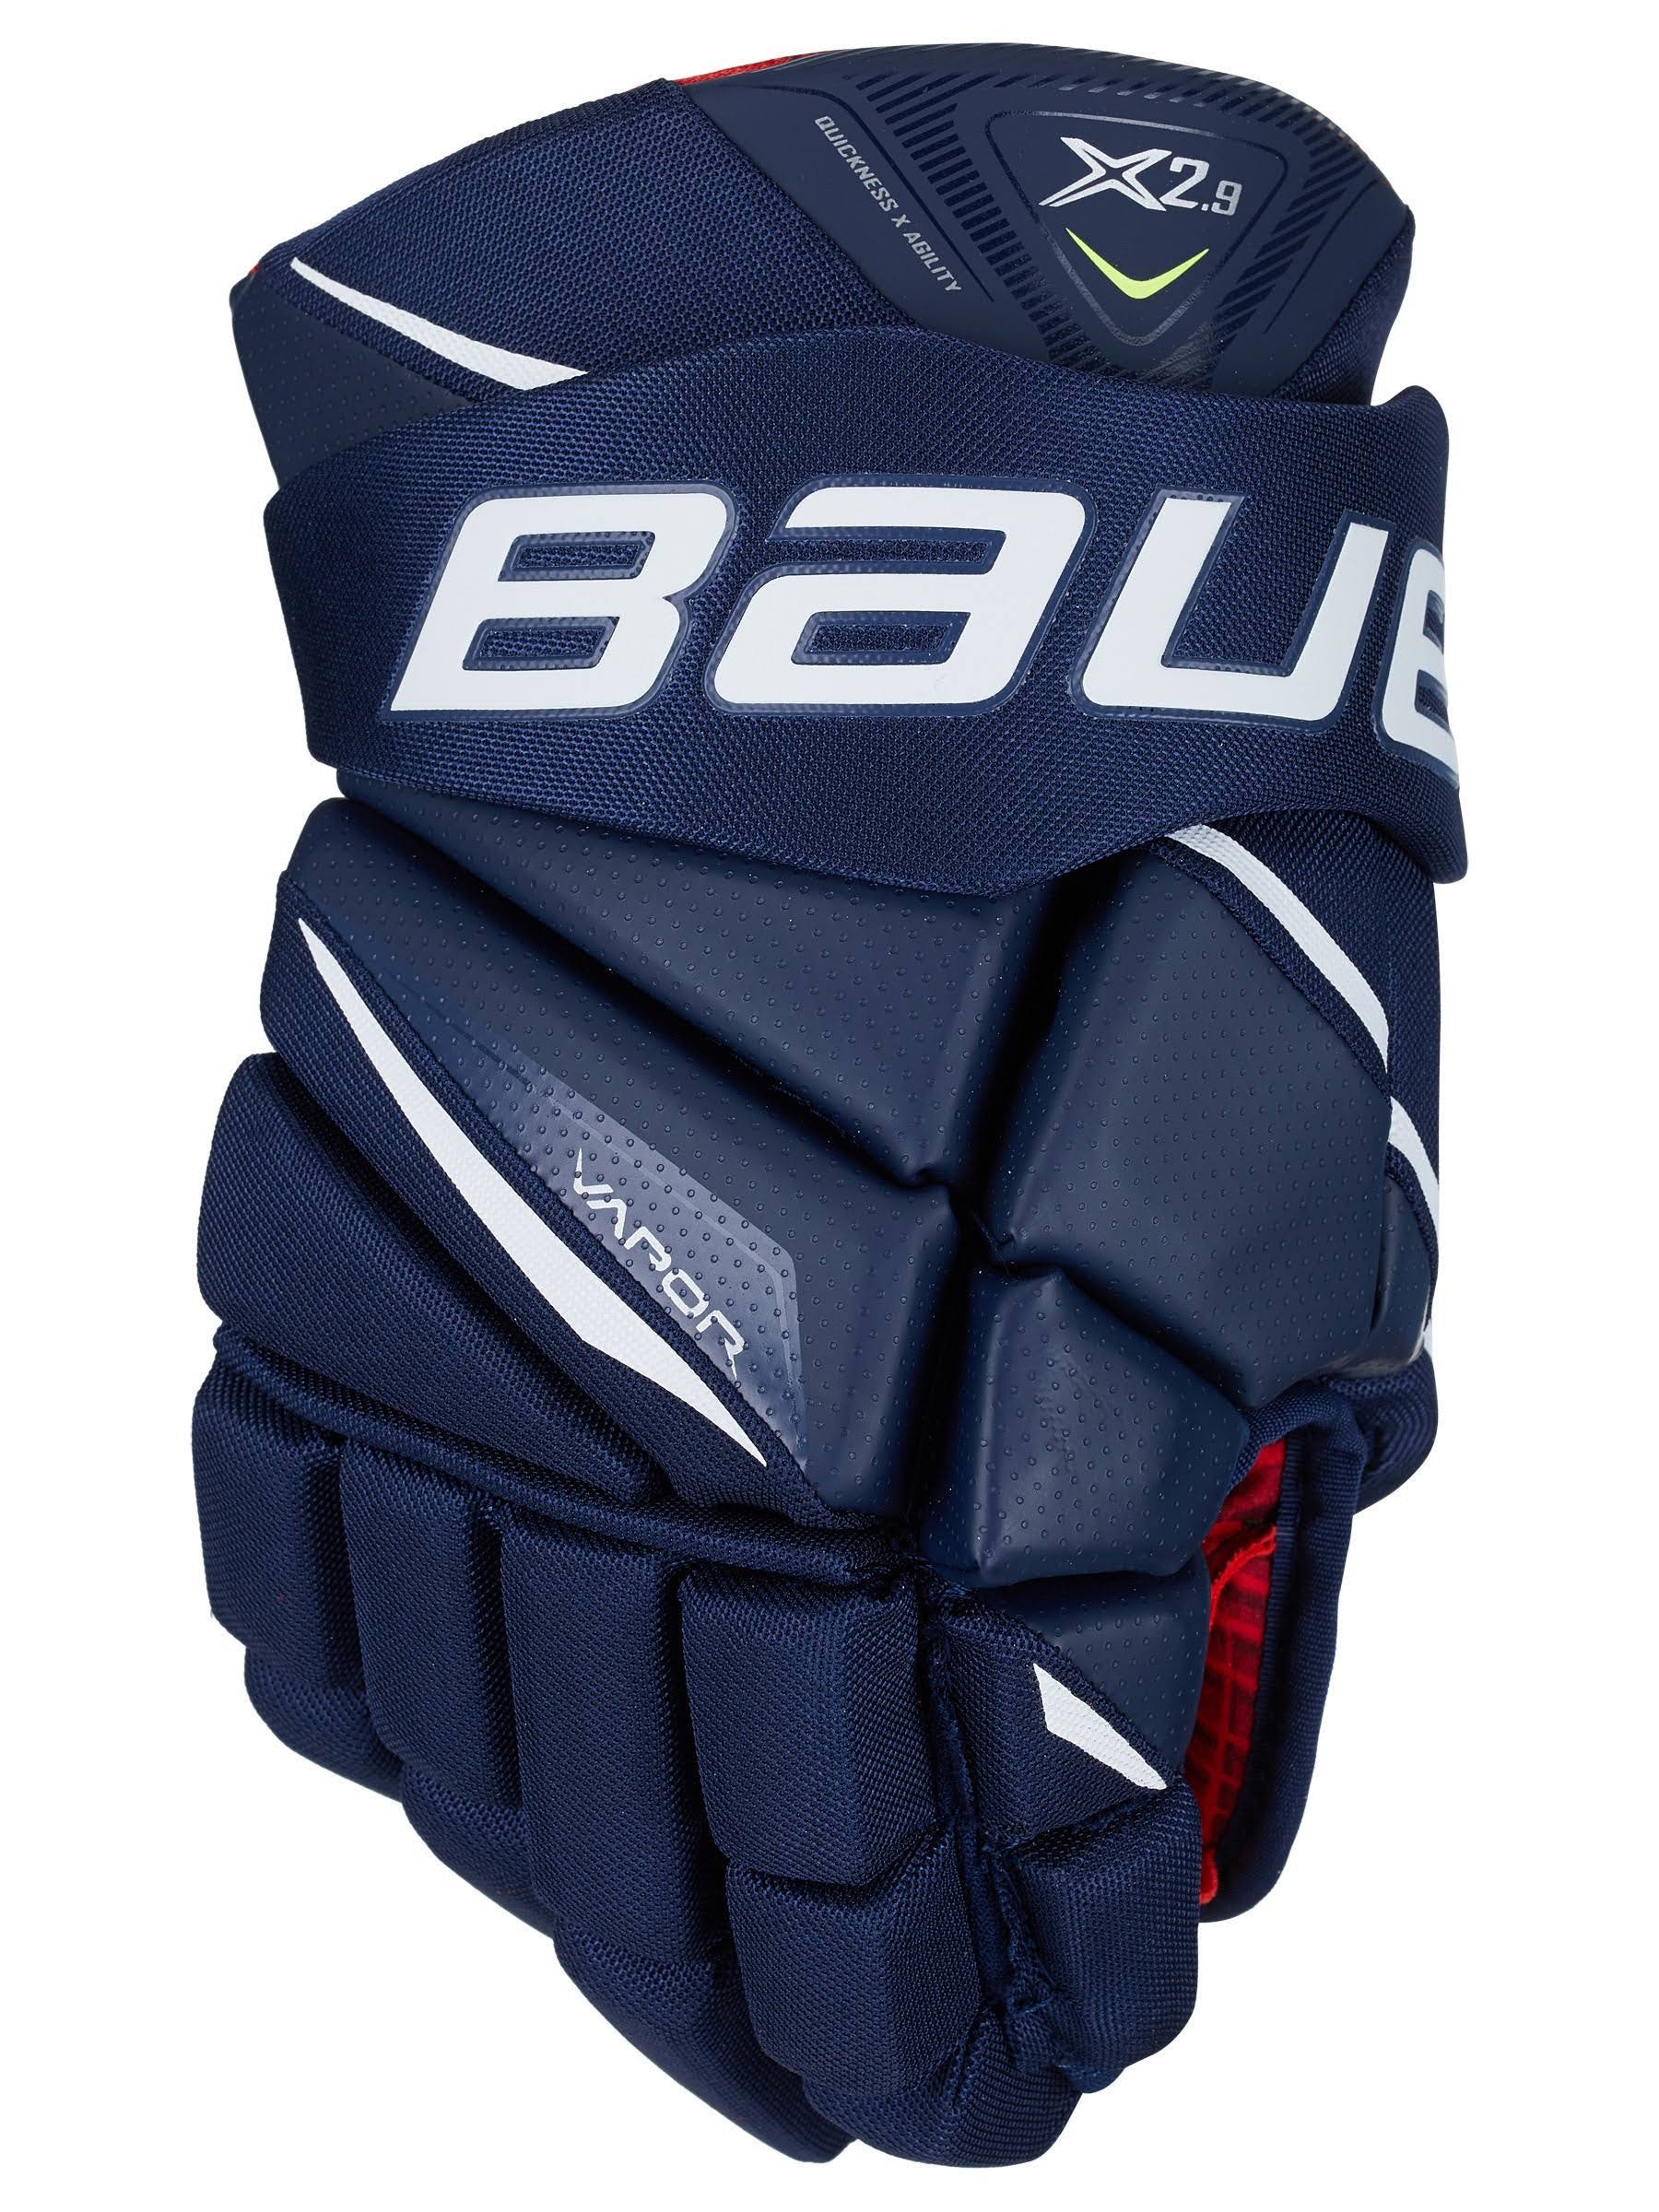 Bauer Vapor X2.9 Hockey Gloves - Senior - Navy - 13.0"